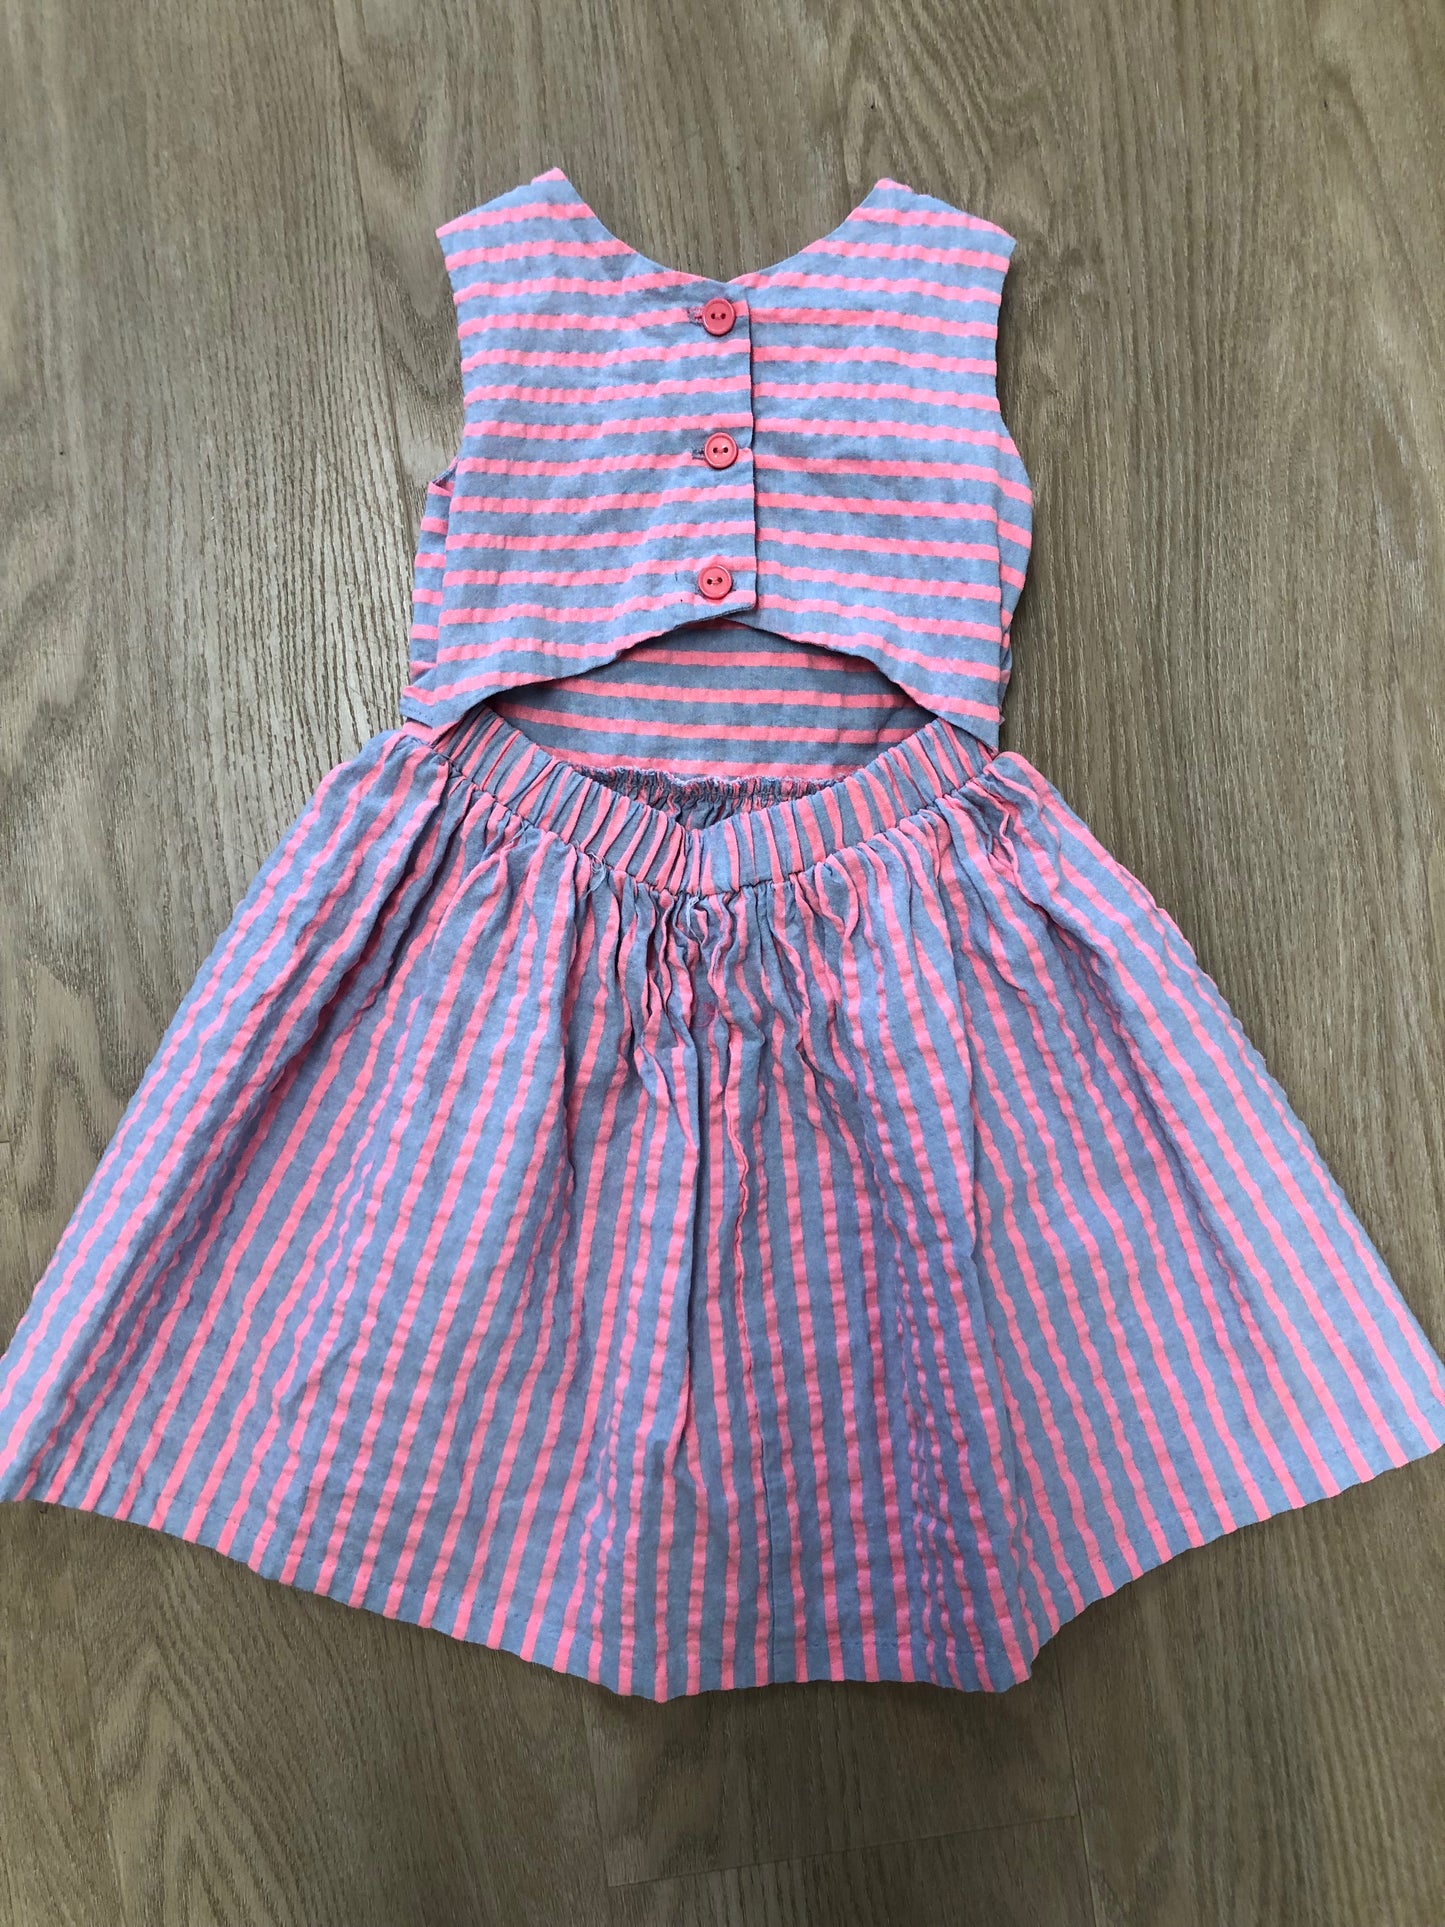 Iris & Ivy Child Size 3T Pink Stripe Dress